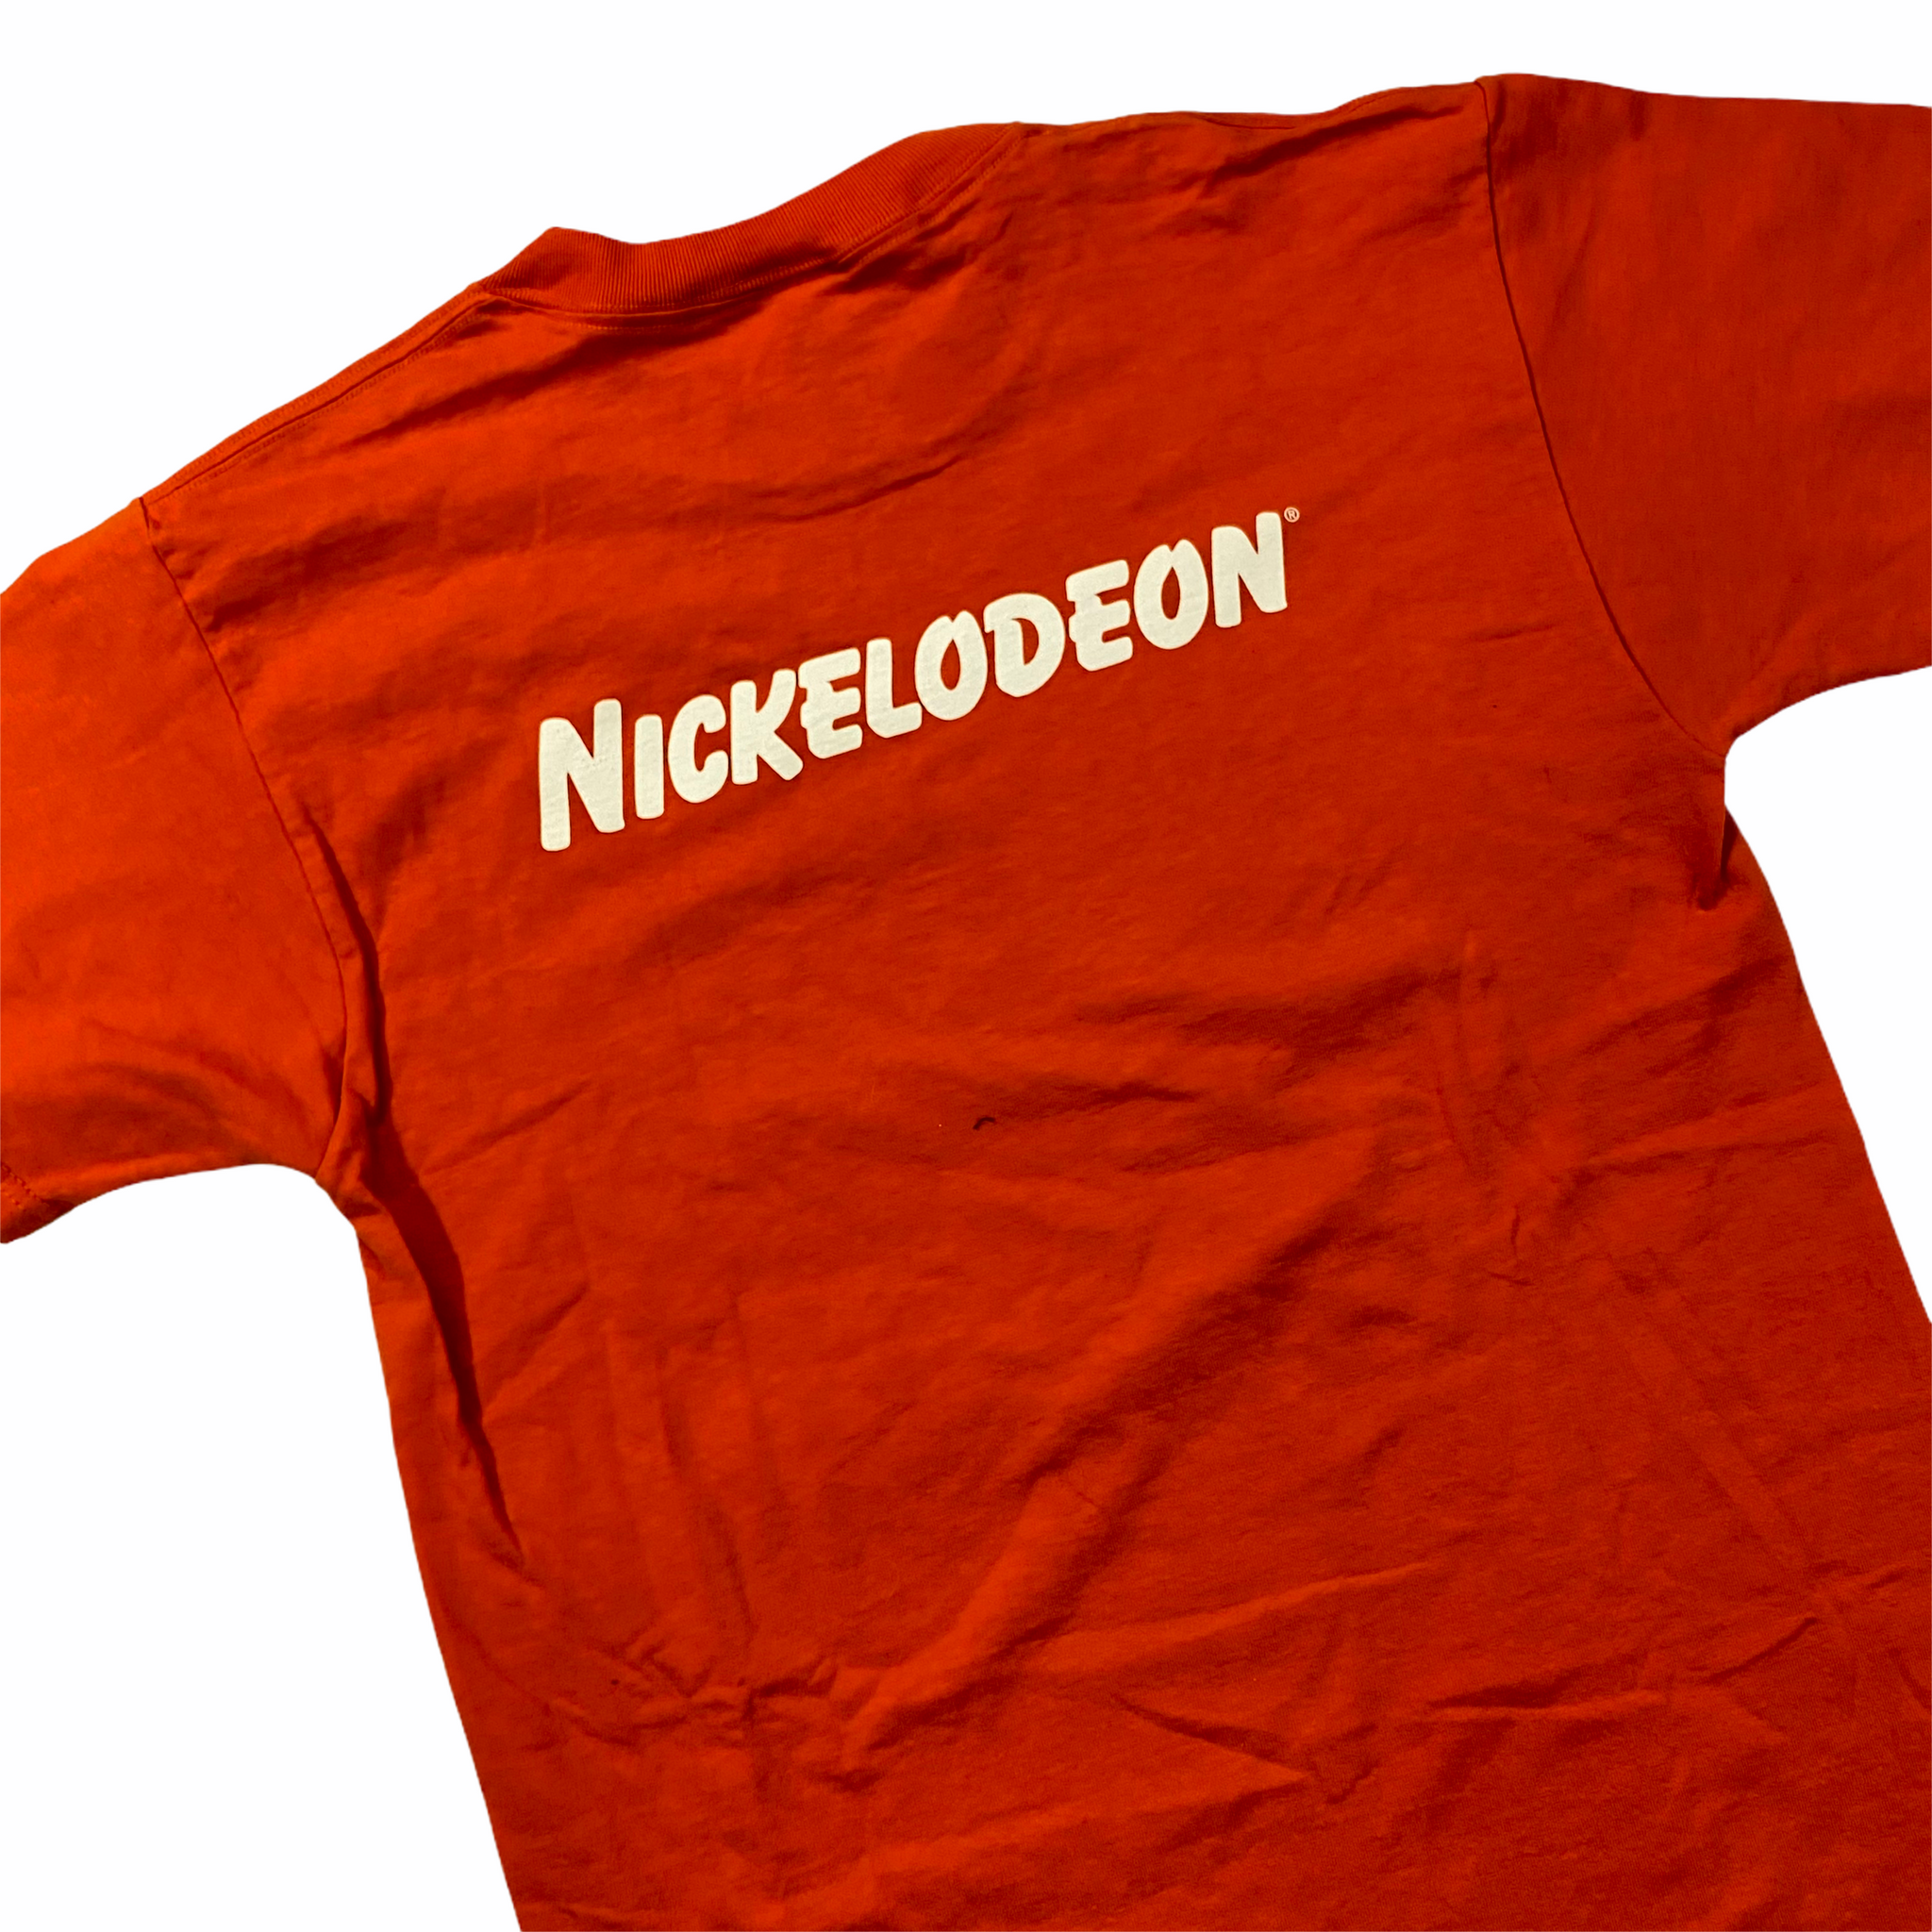 Nickelodeon tee. medium